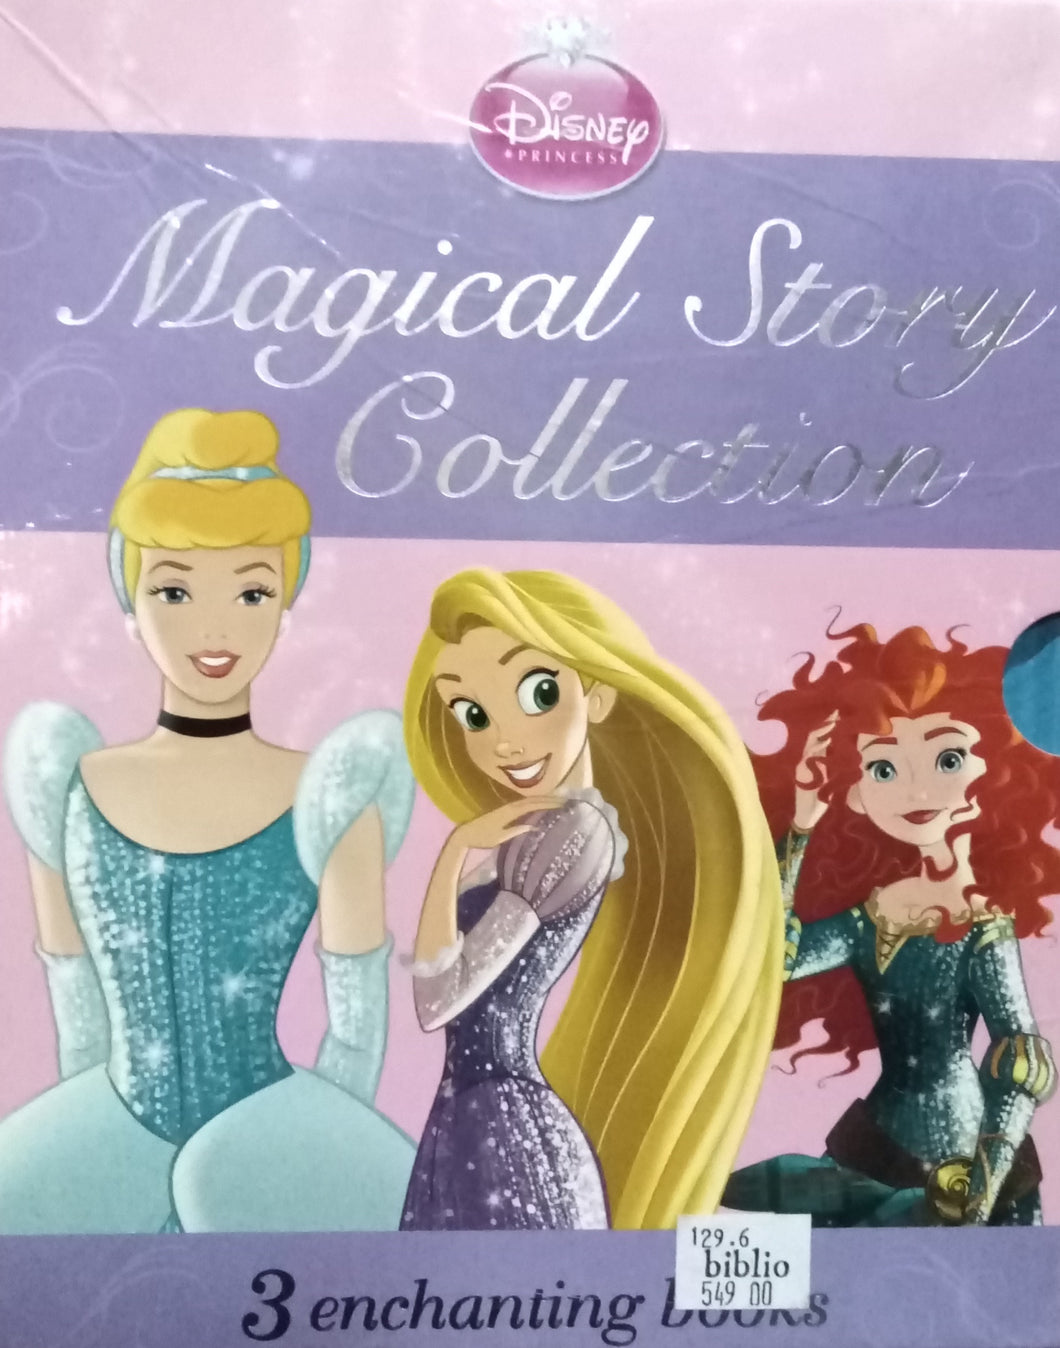 Disney Princess Magical Story Collection 3 Enchanting Books